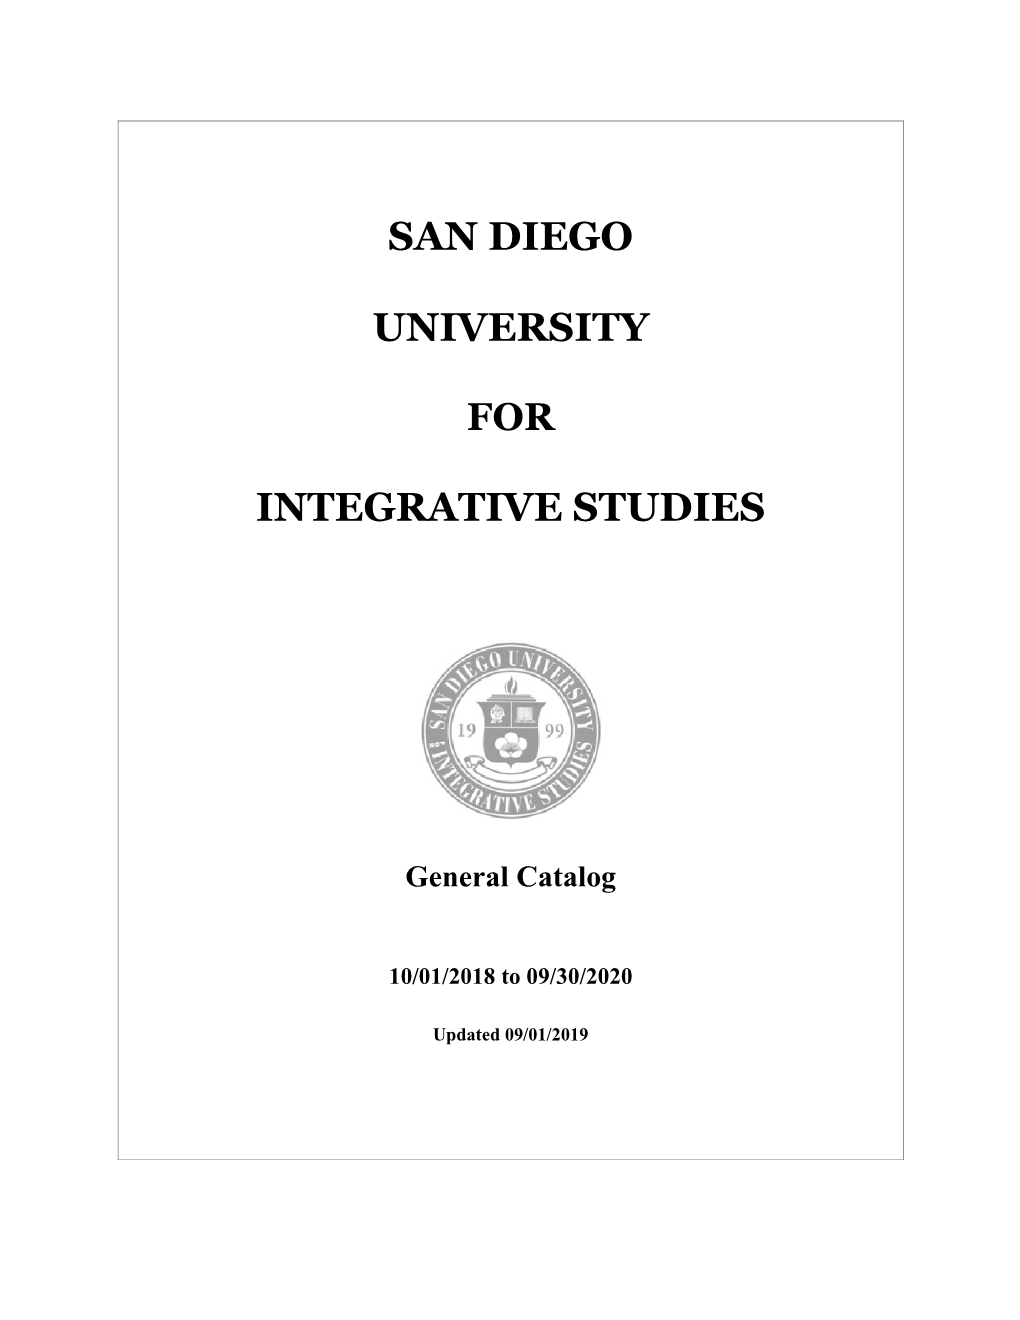 SAN DIEGO UNIVERSITY for INTEGRATIVE STUDIES General